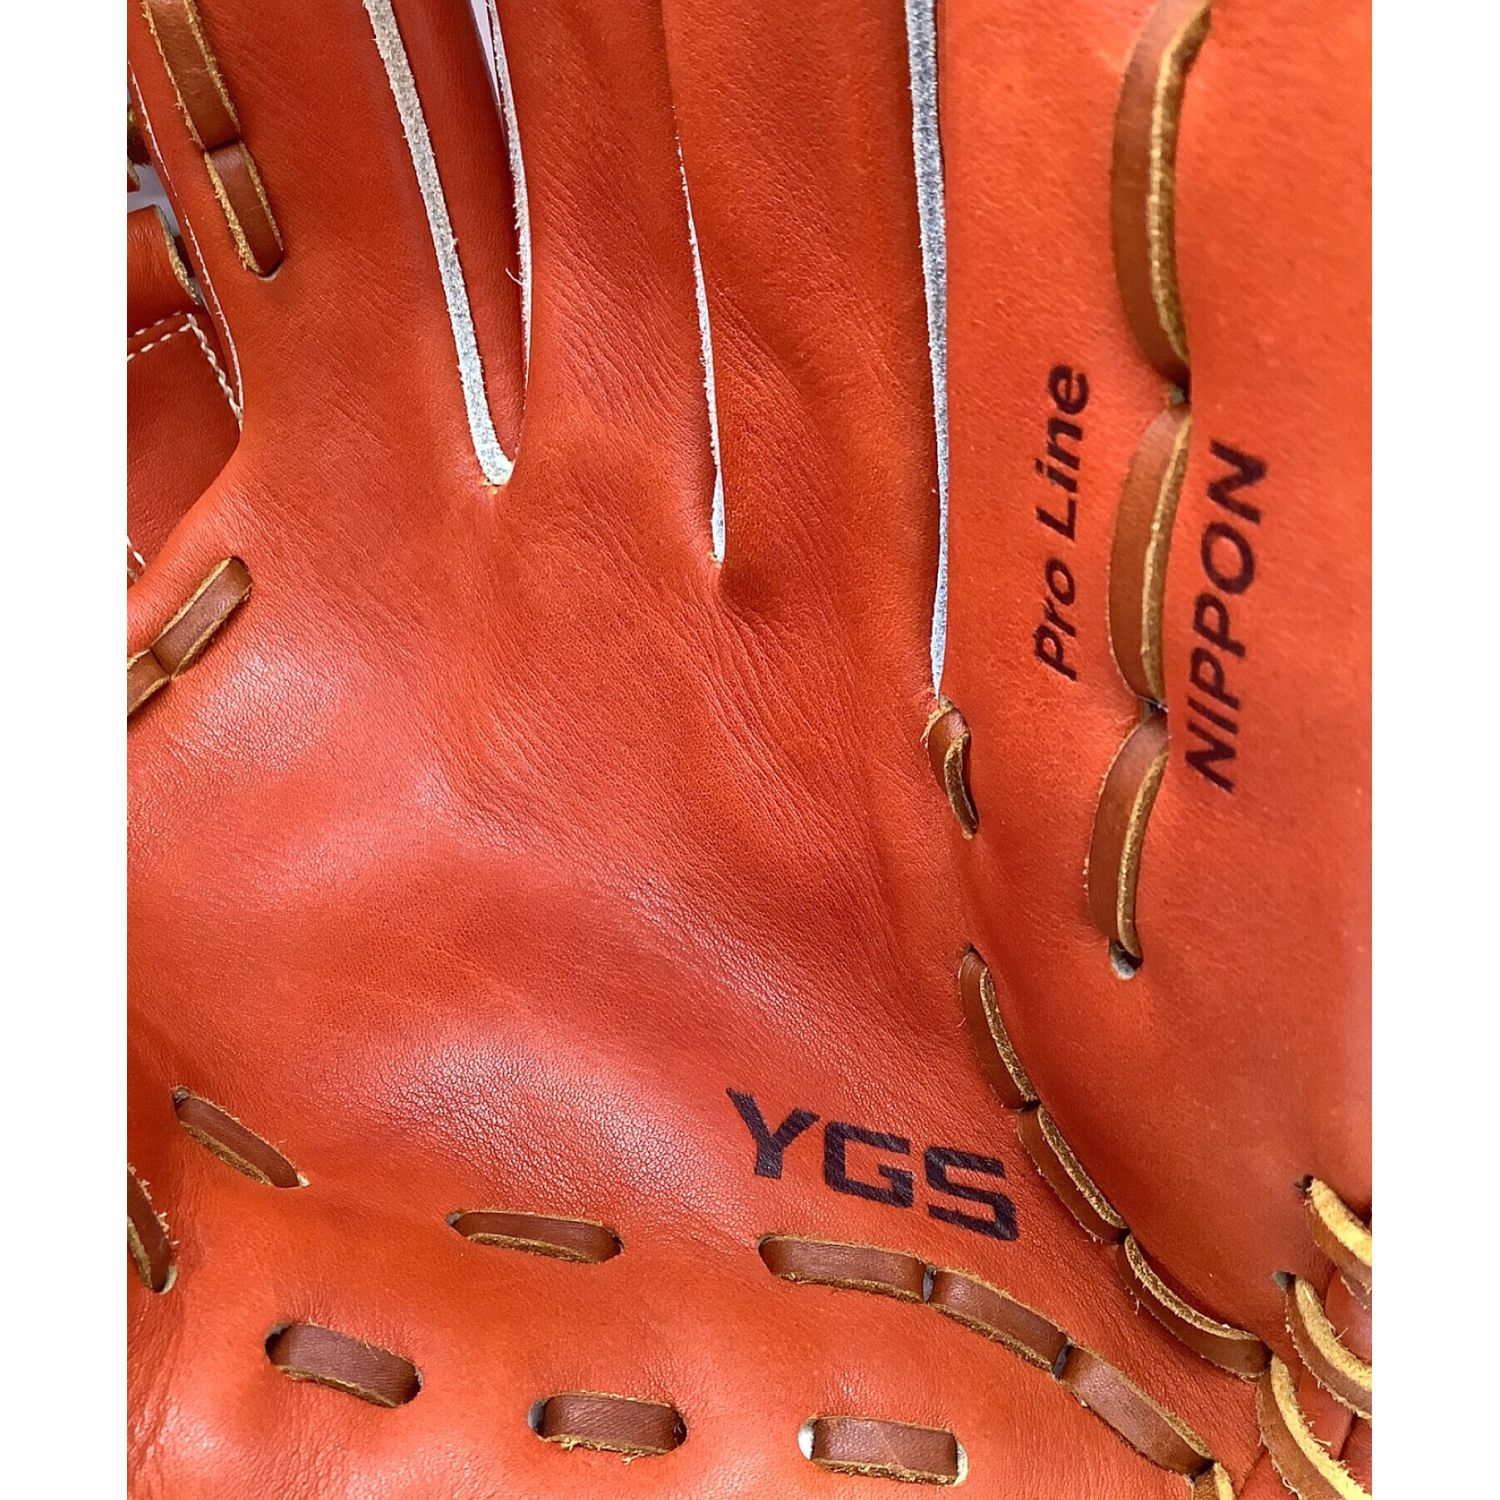 YGS (山本グラブスタジオ) 硬式グローブ 約30cm オレンジ YAMAMOTO GLOVE STUDIO PRO LINE 投手用 TG